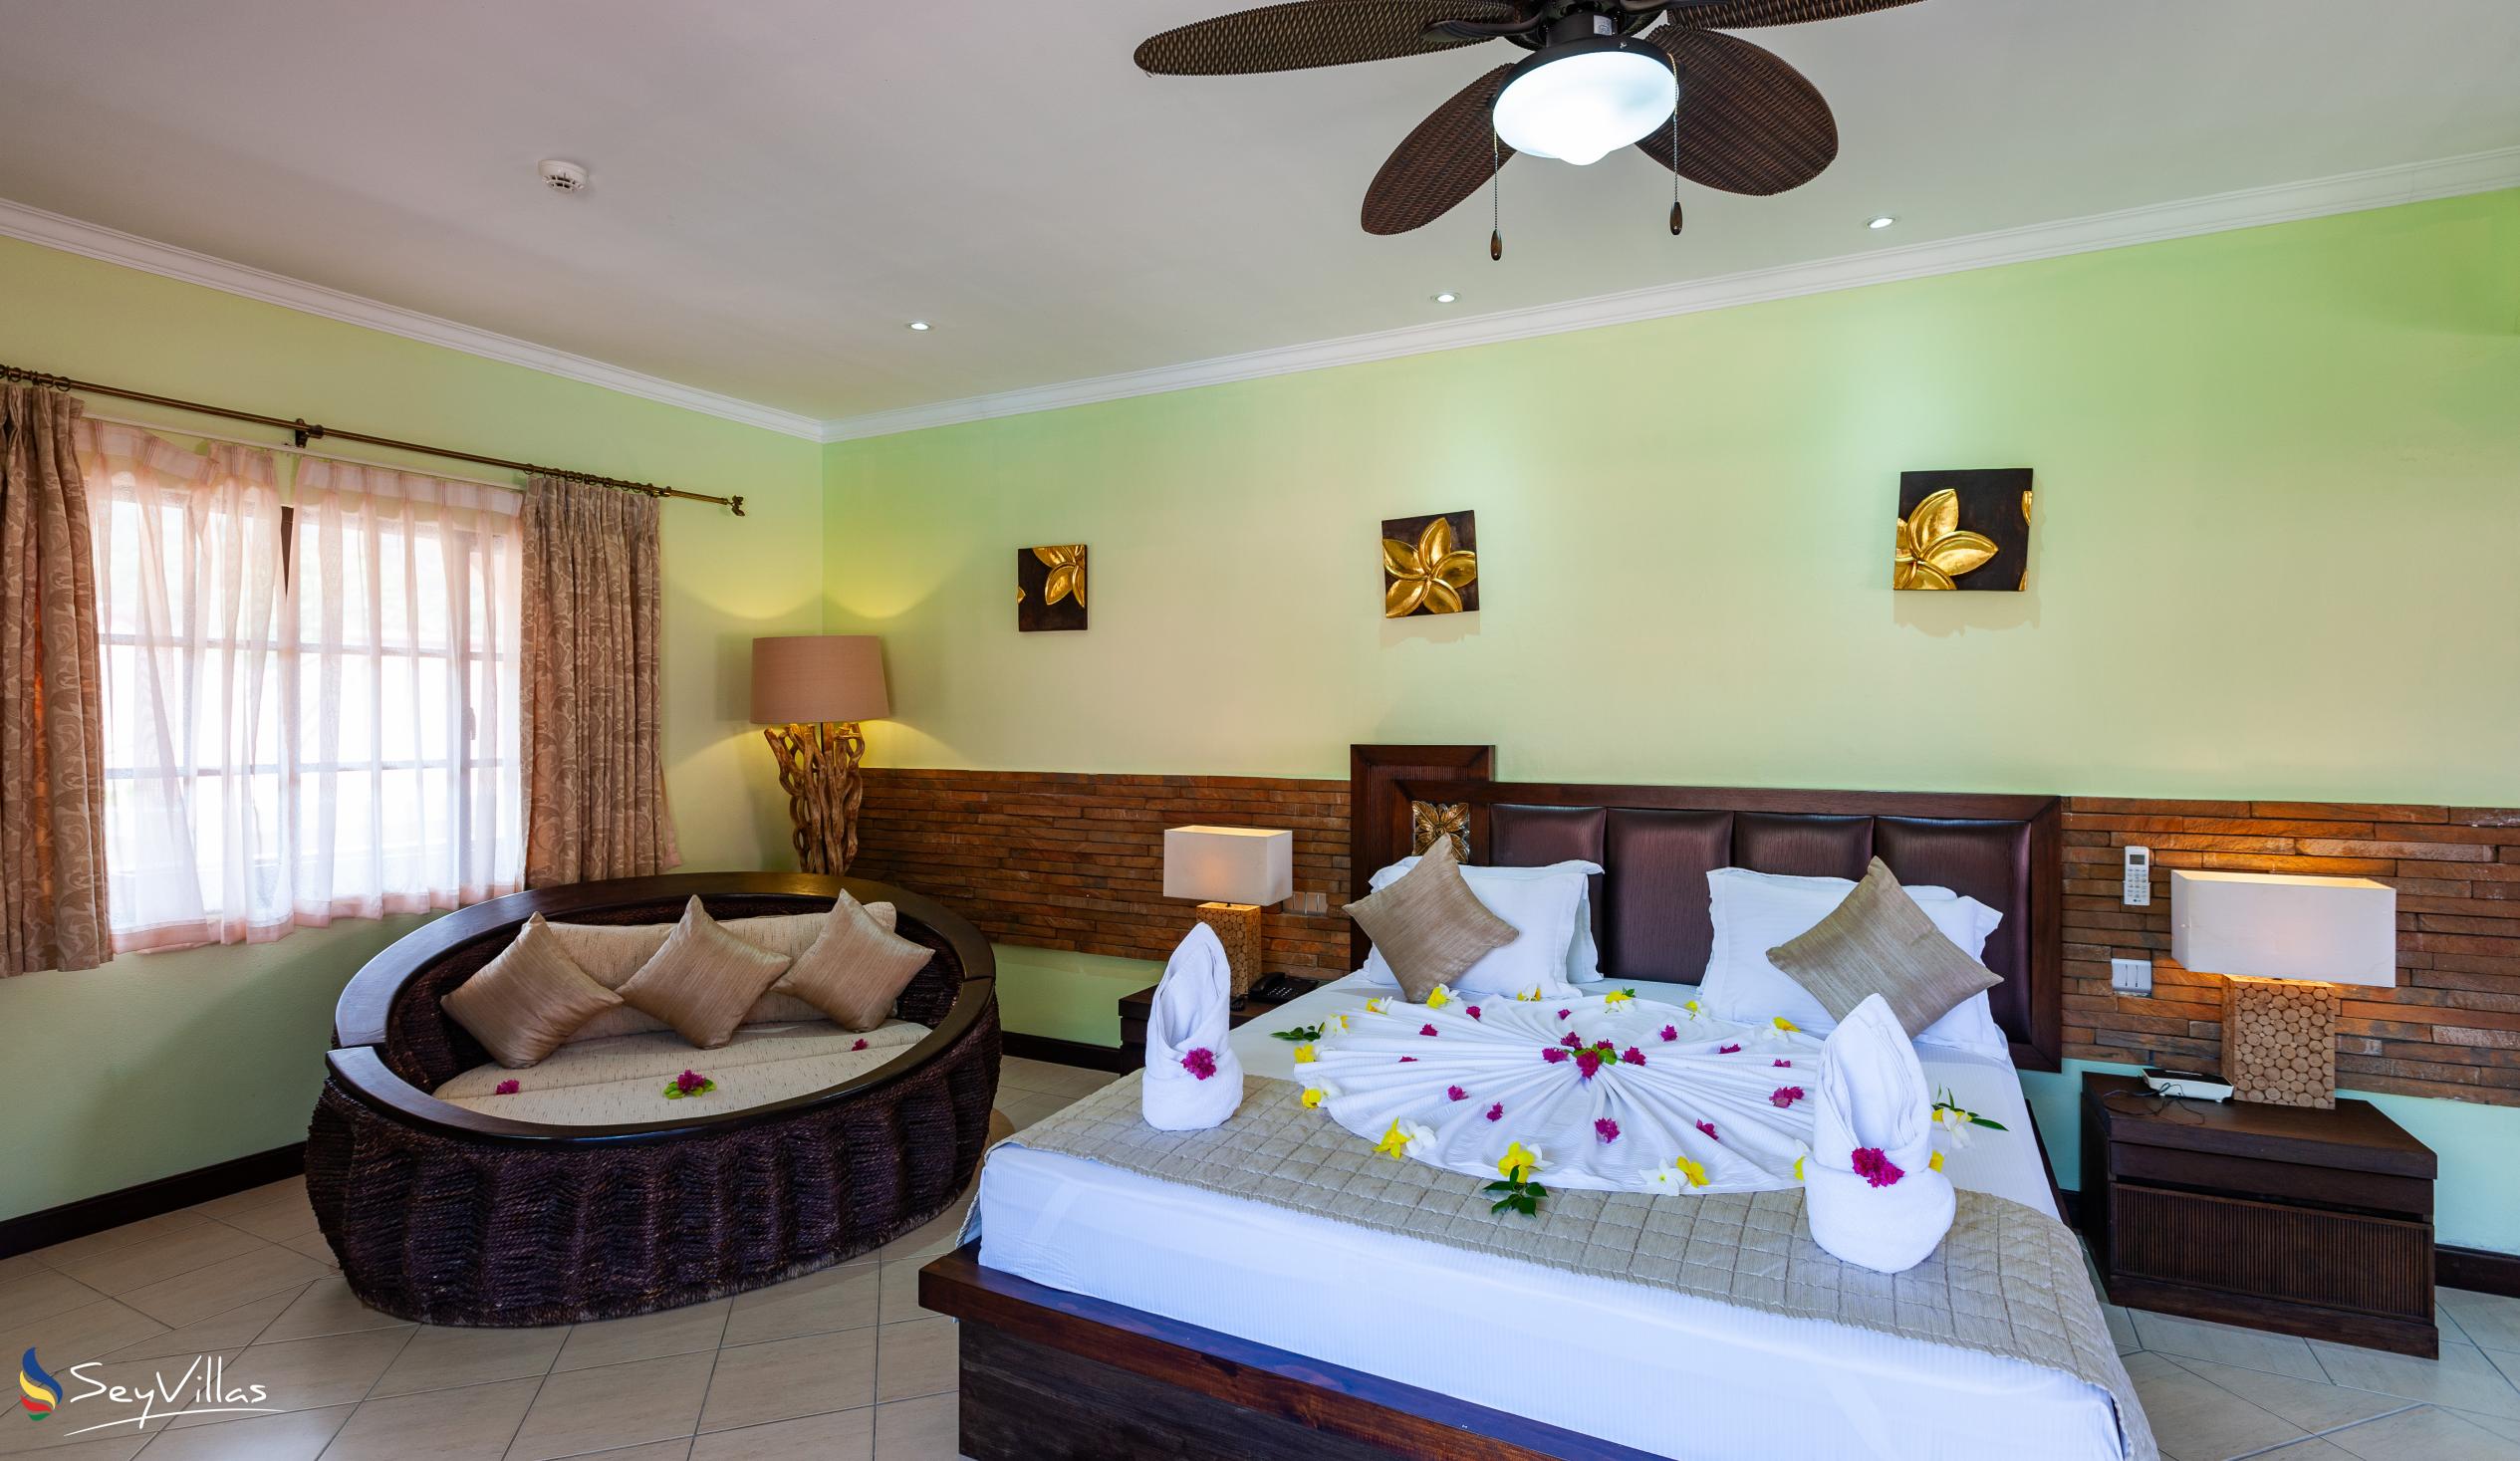 Photo 55: Oasis Hotel, Restaurant & Spa - Deluxe Room - Praslin (Seychelles)